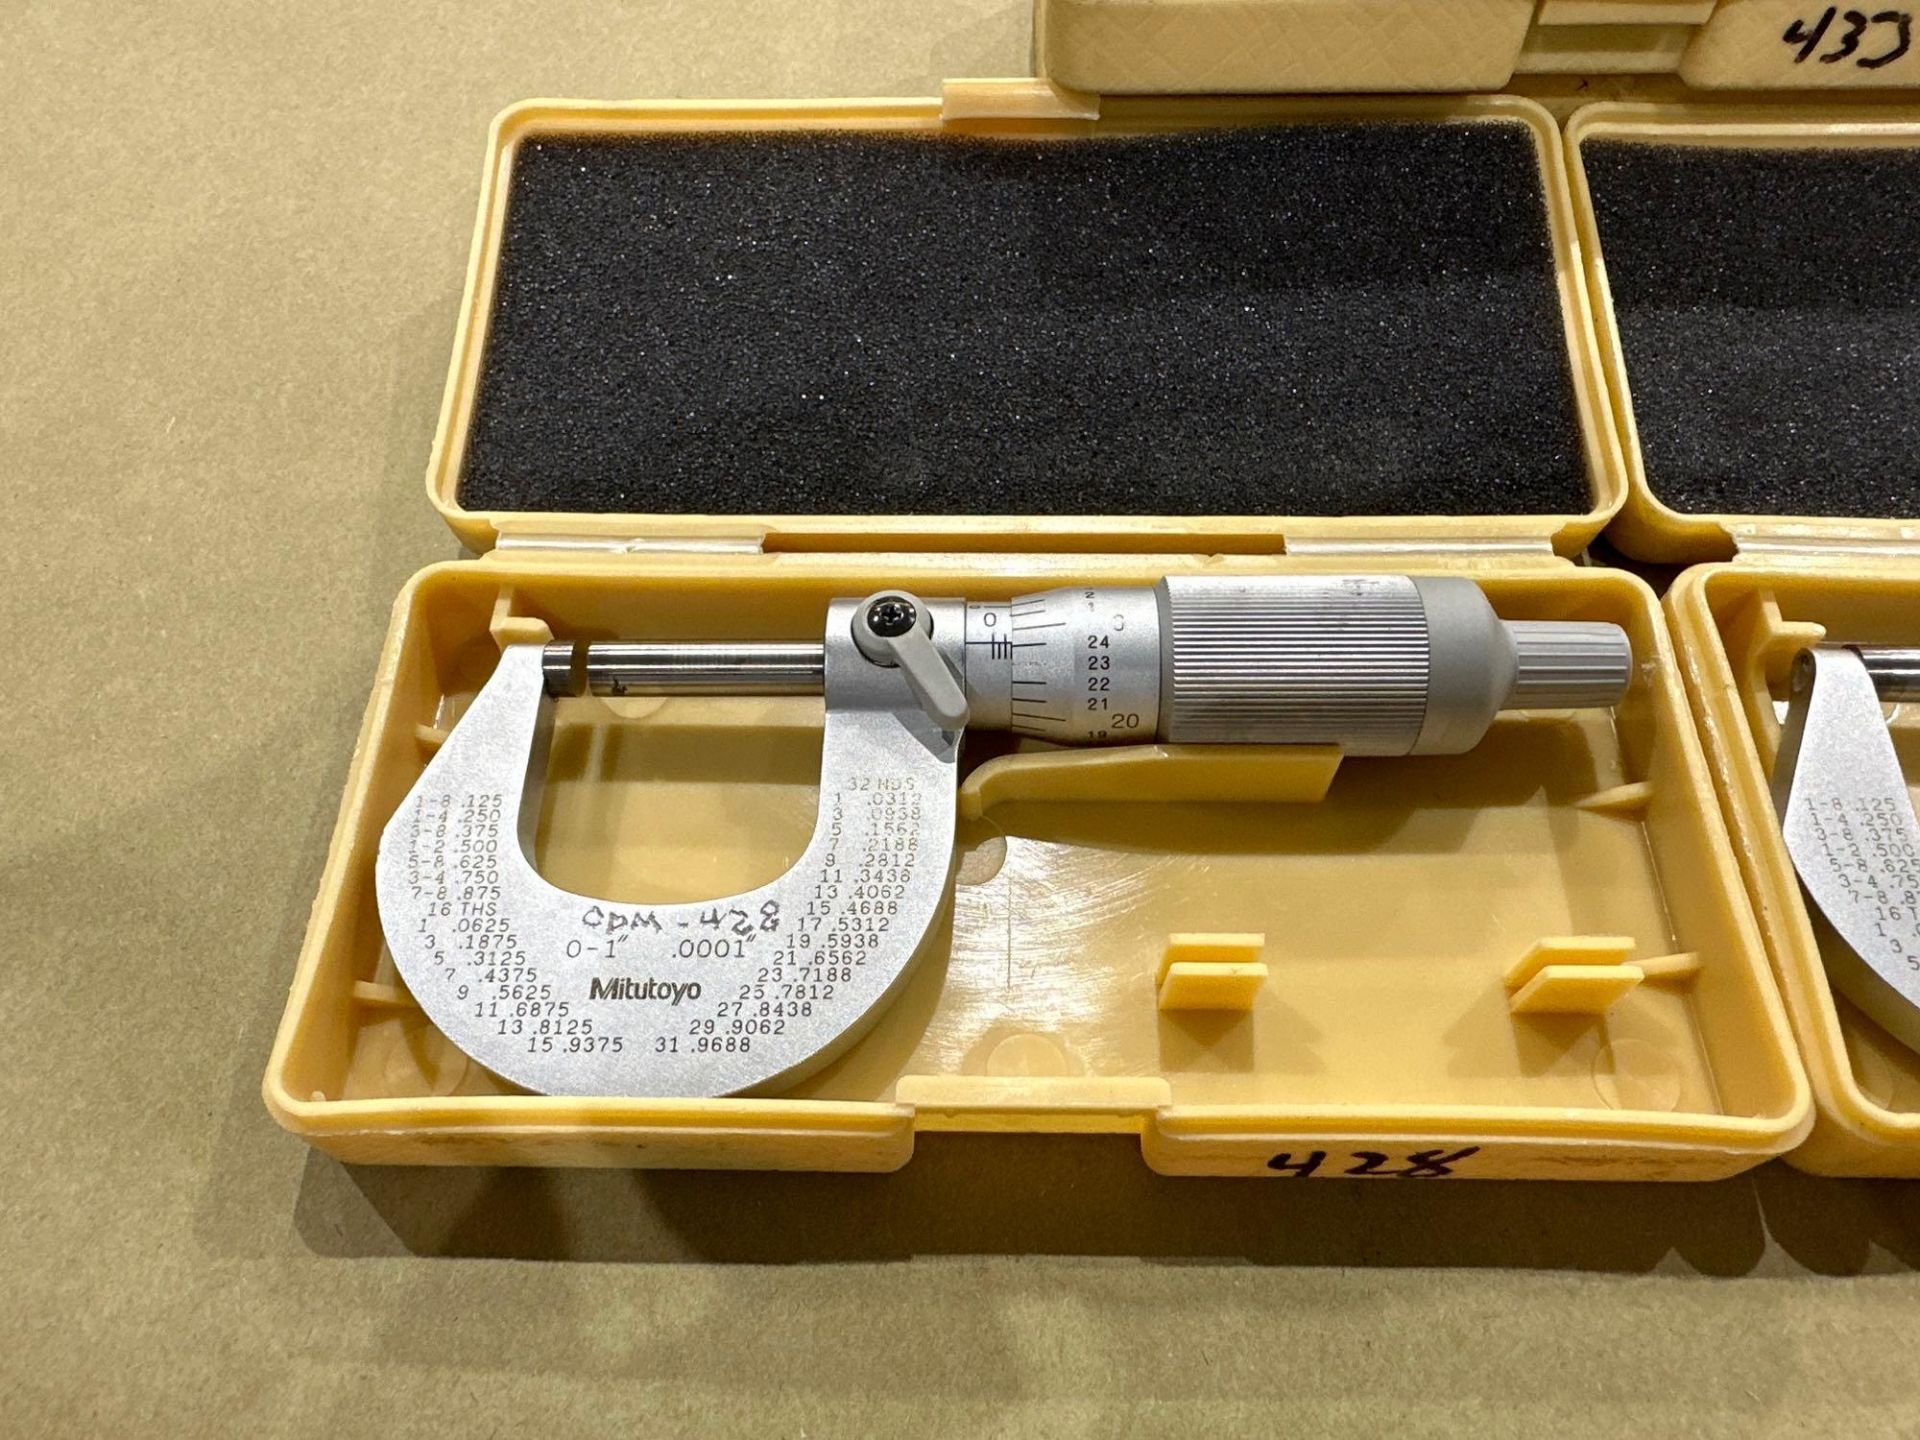 Lot of 4: Mitutoyo Mechanical OD Micrometer M227-1”, 0-1” Range, .0001” Graduation, in plastic box - Image 5 of 6